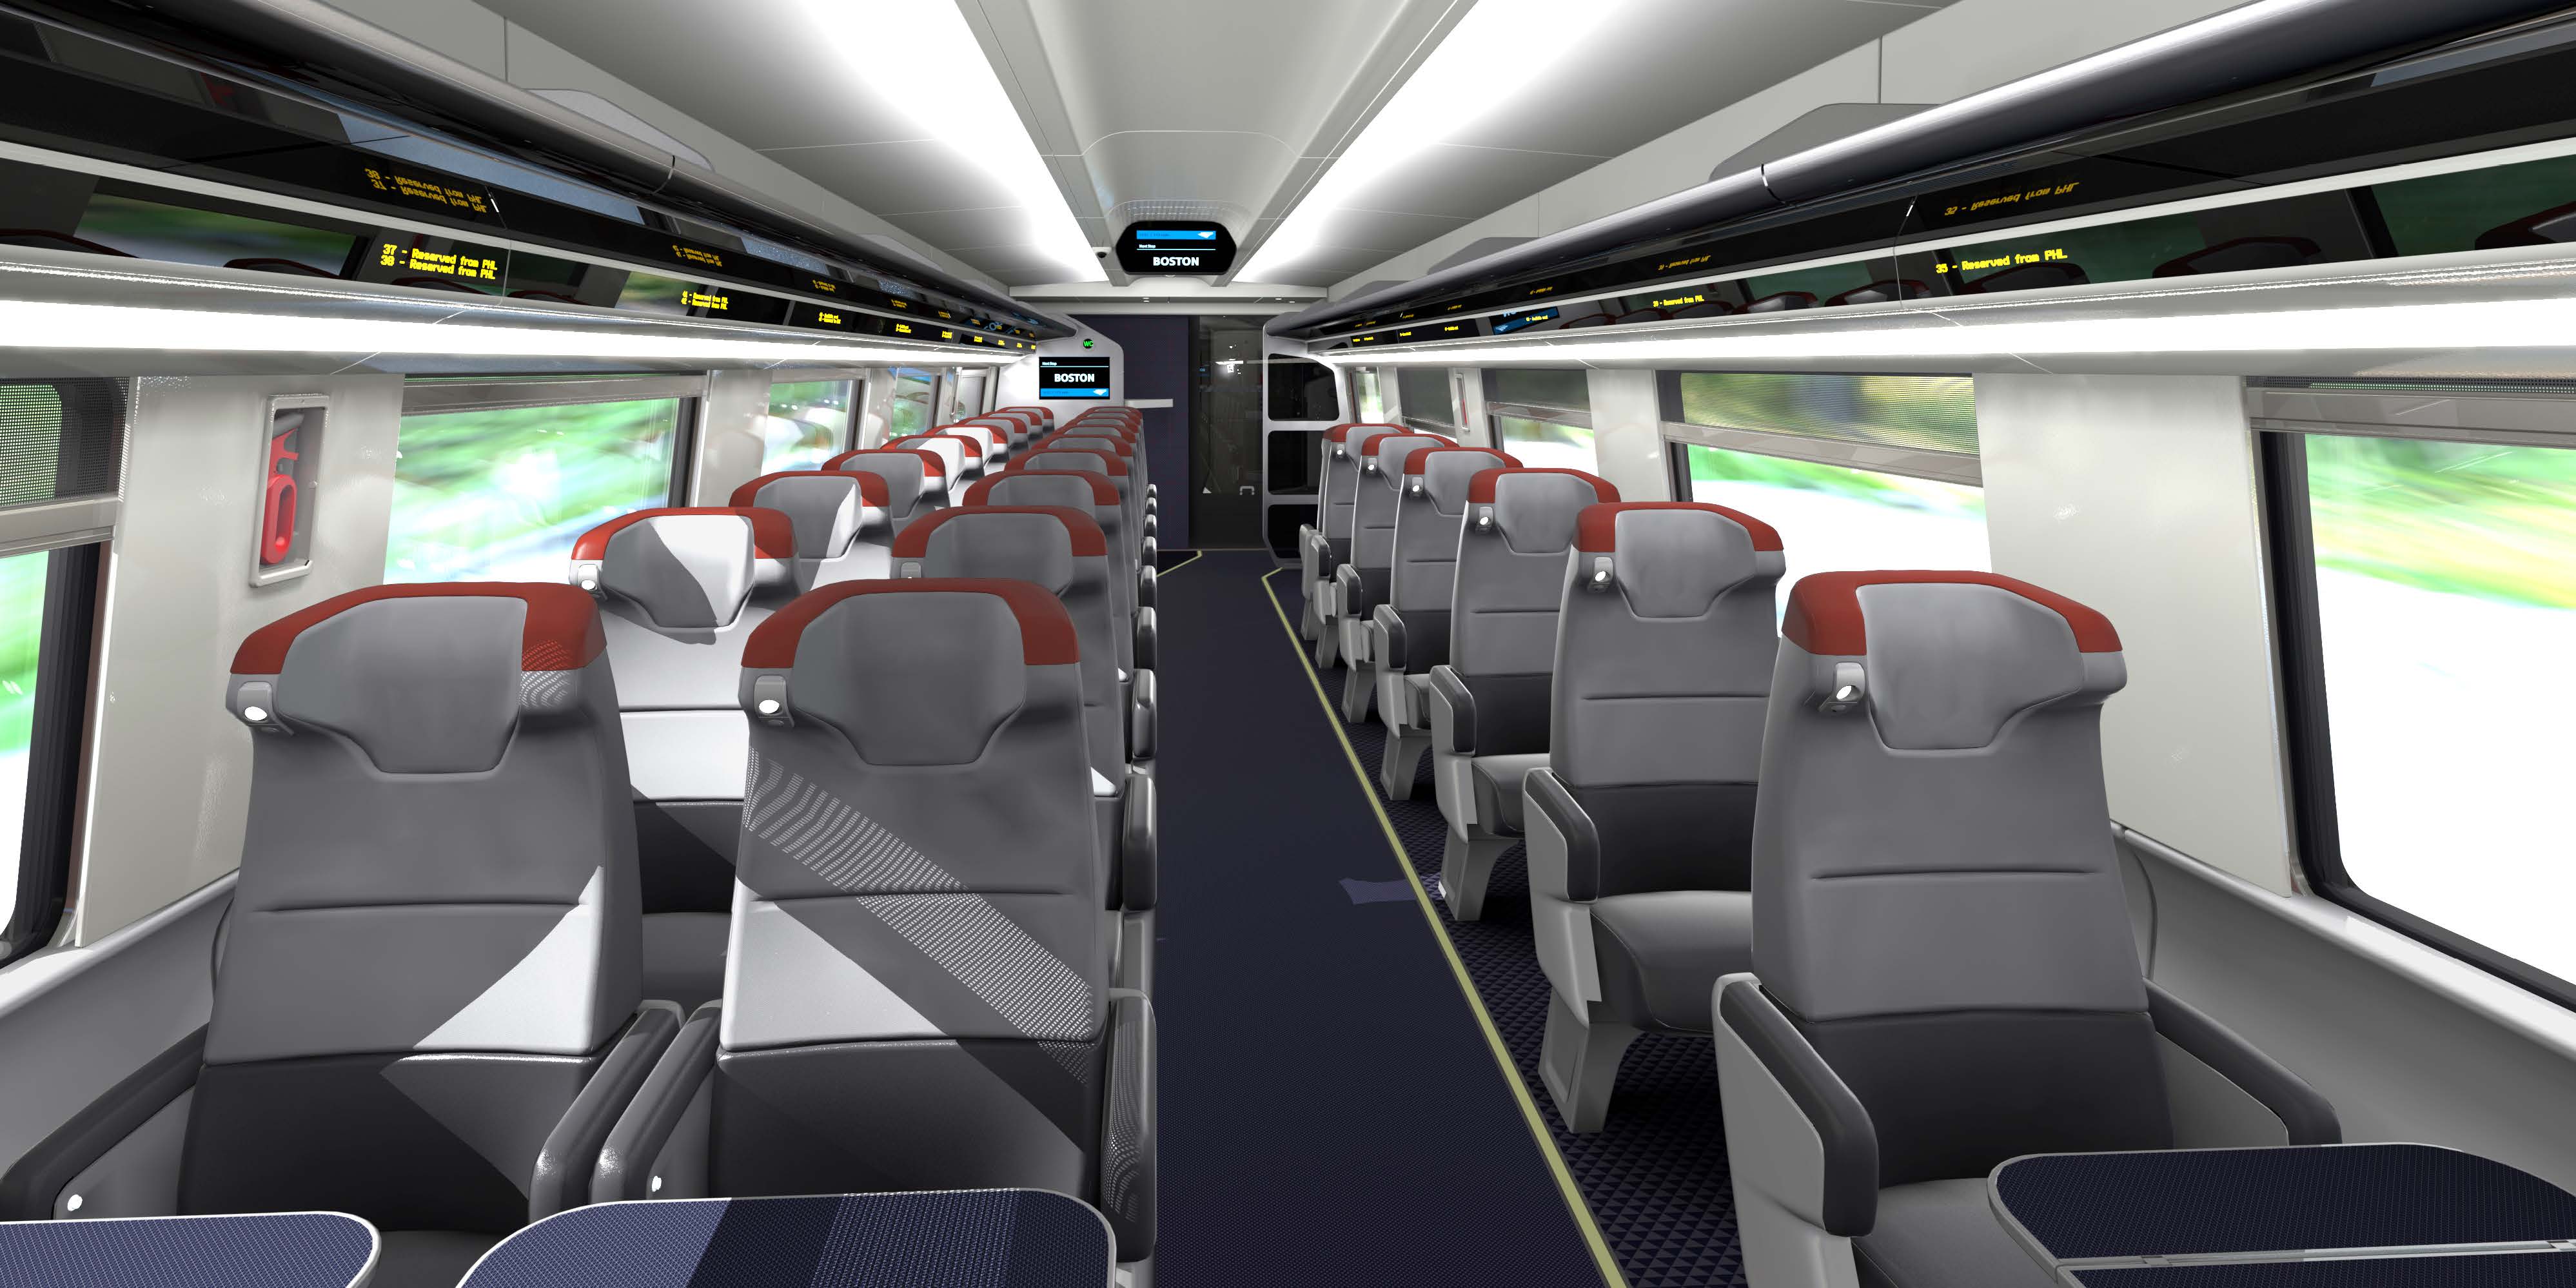 Amtrak Reveals Modern Interiors On New Acela Express Fleet